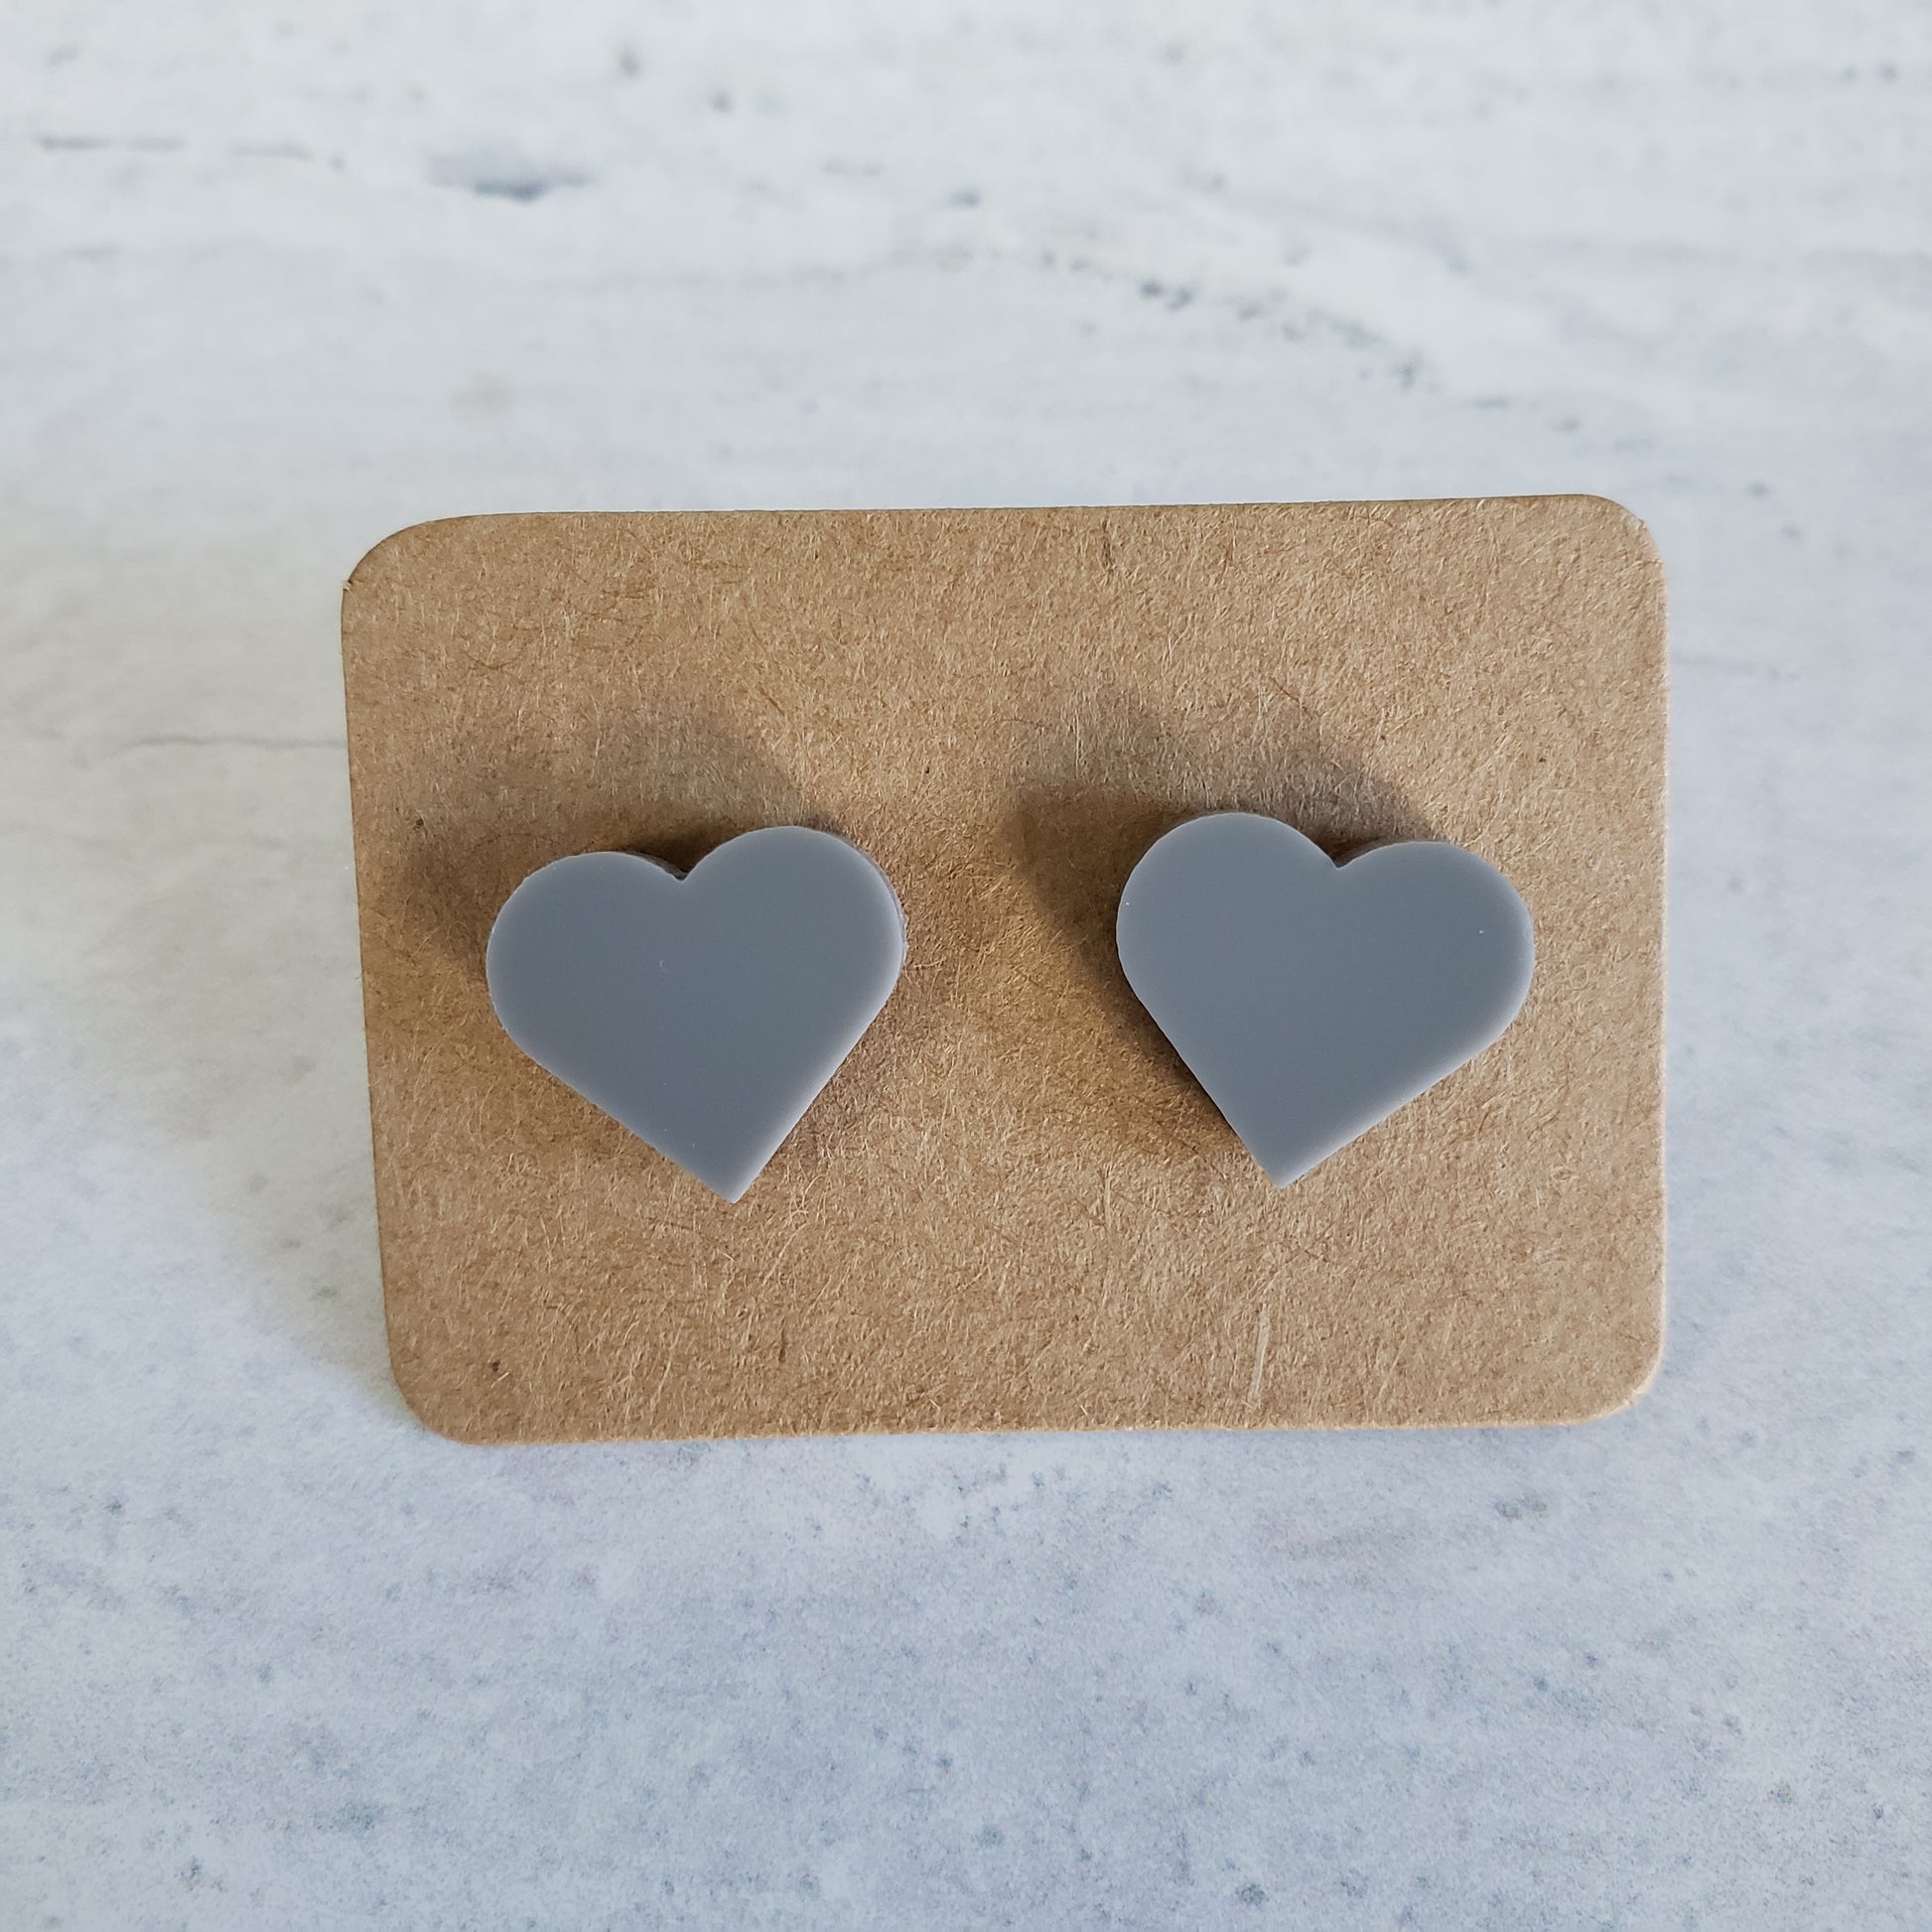 Gloss gray heart shaped stud earrings.